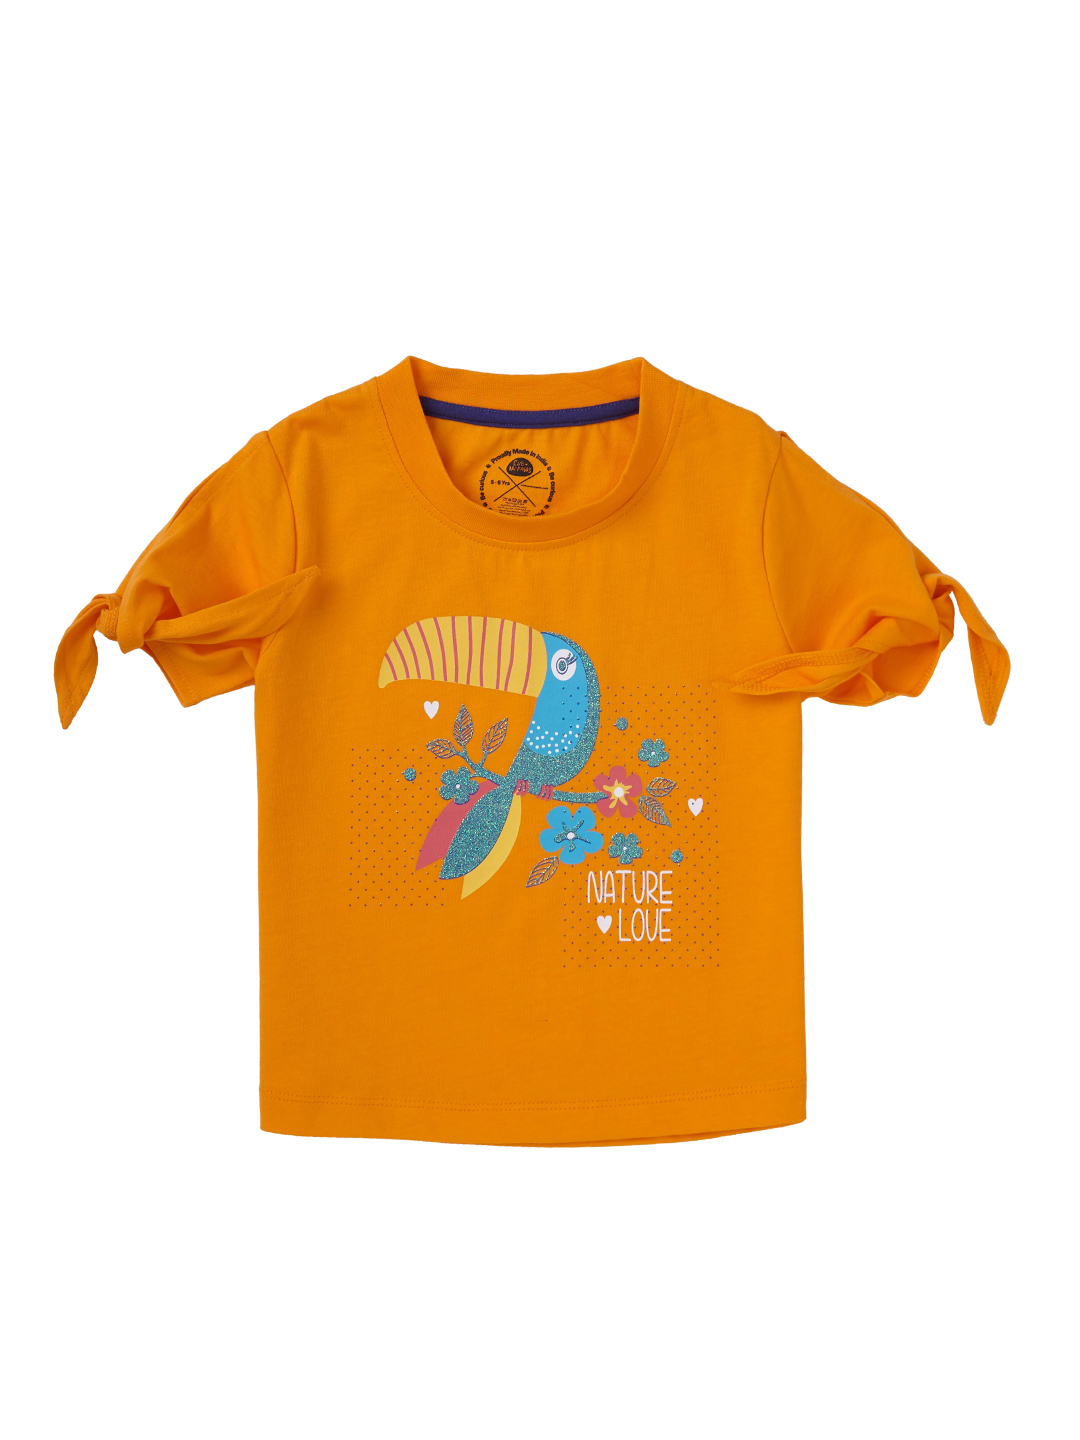 Orange cropped Fashion T-shirt for girls (EOSS)